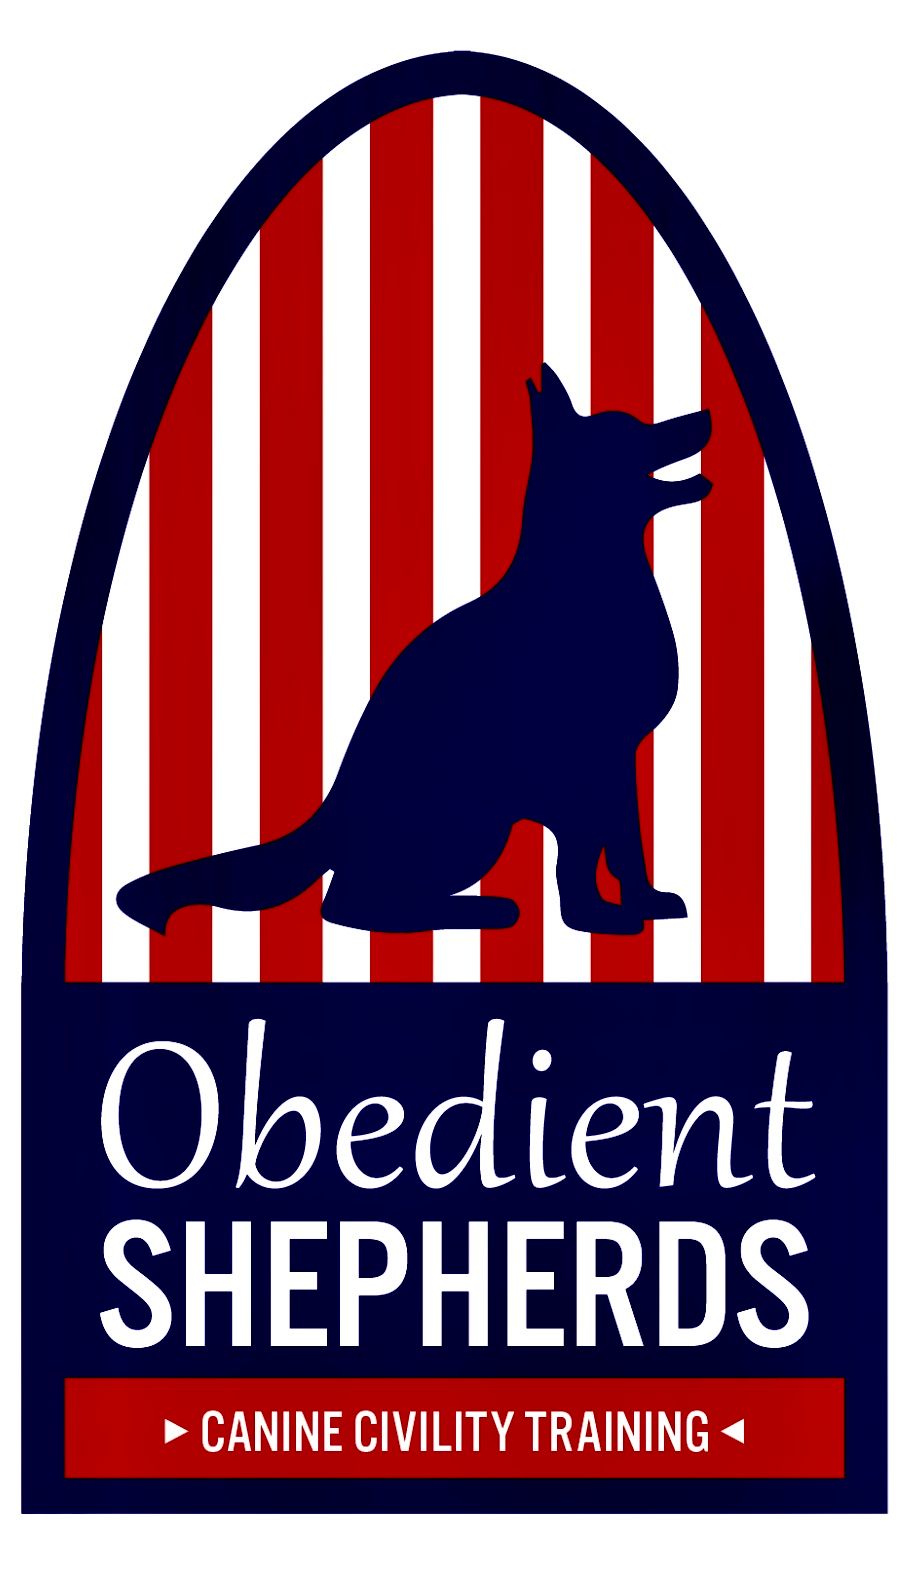 Obedient Shepherds